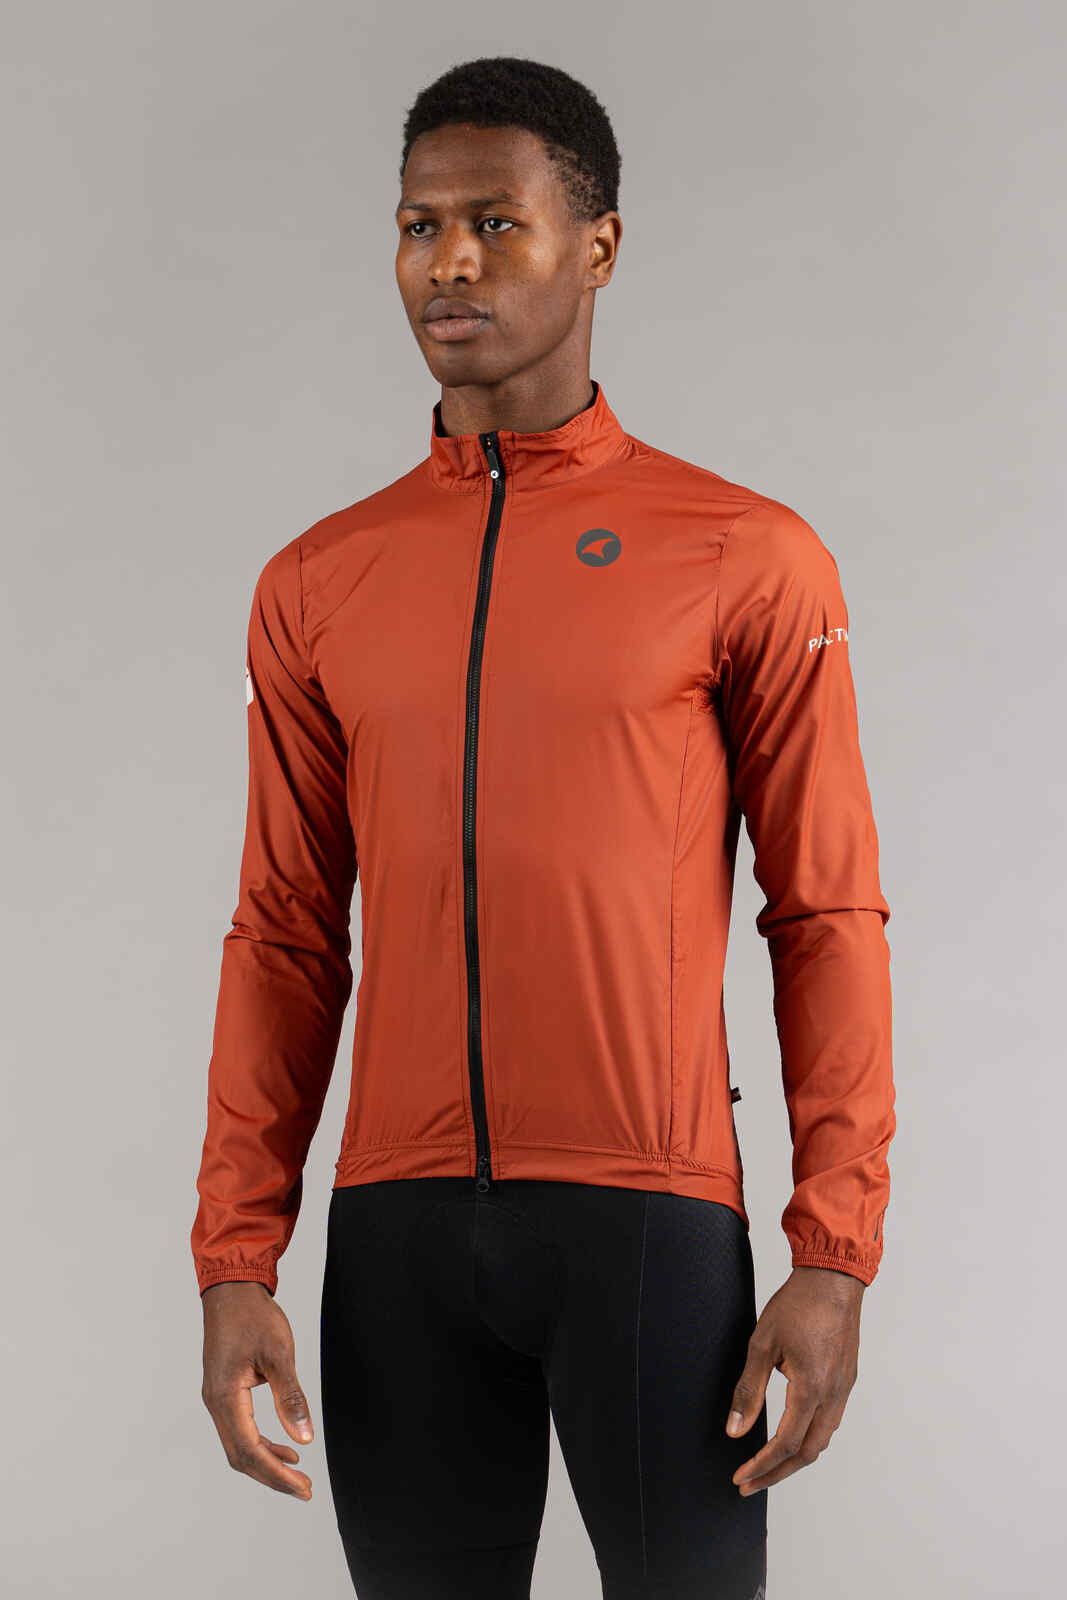 Men's Packable Burnt Orange Cycling Wind Jacket - Front View